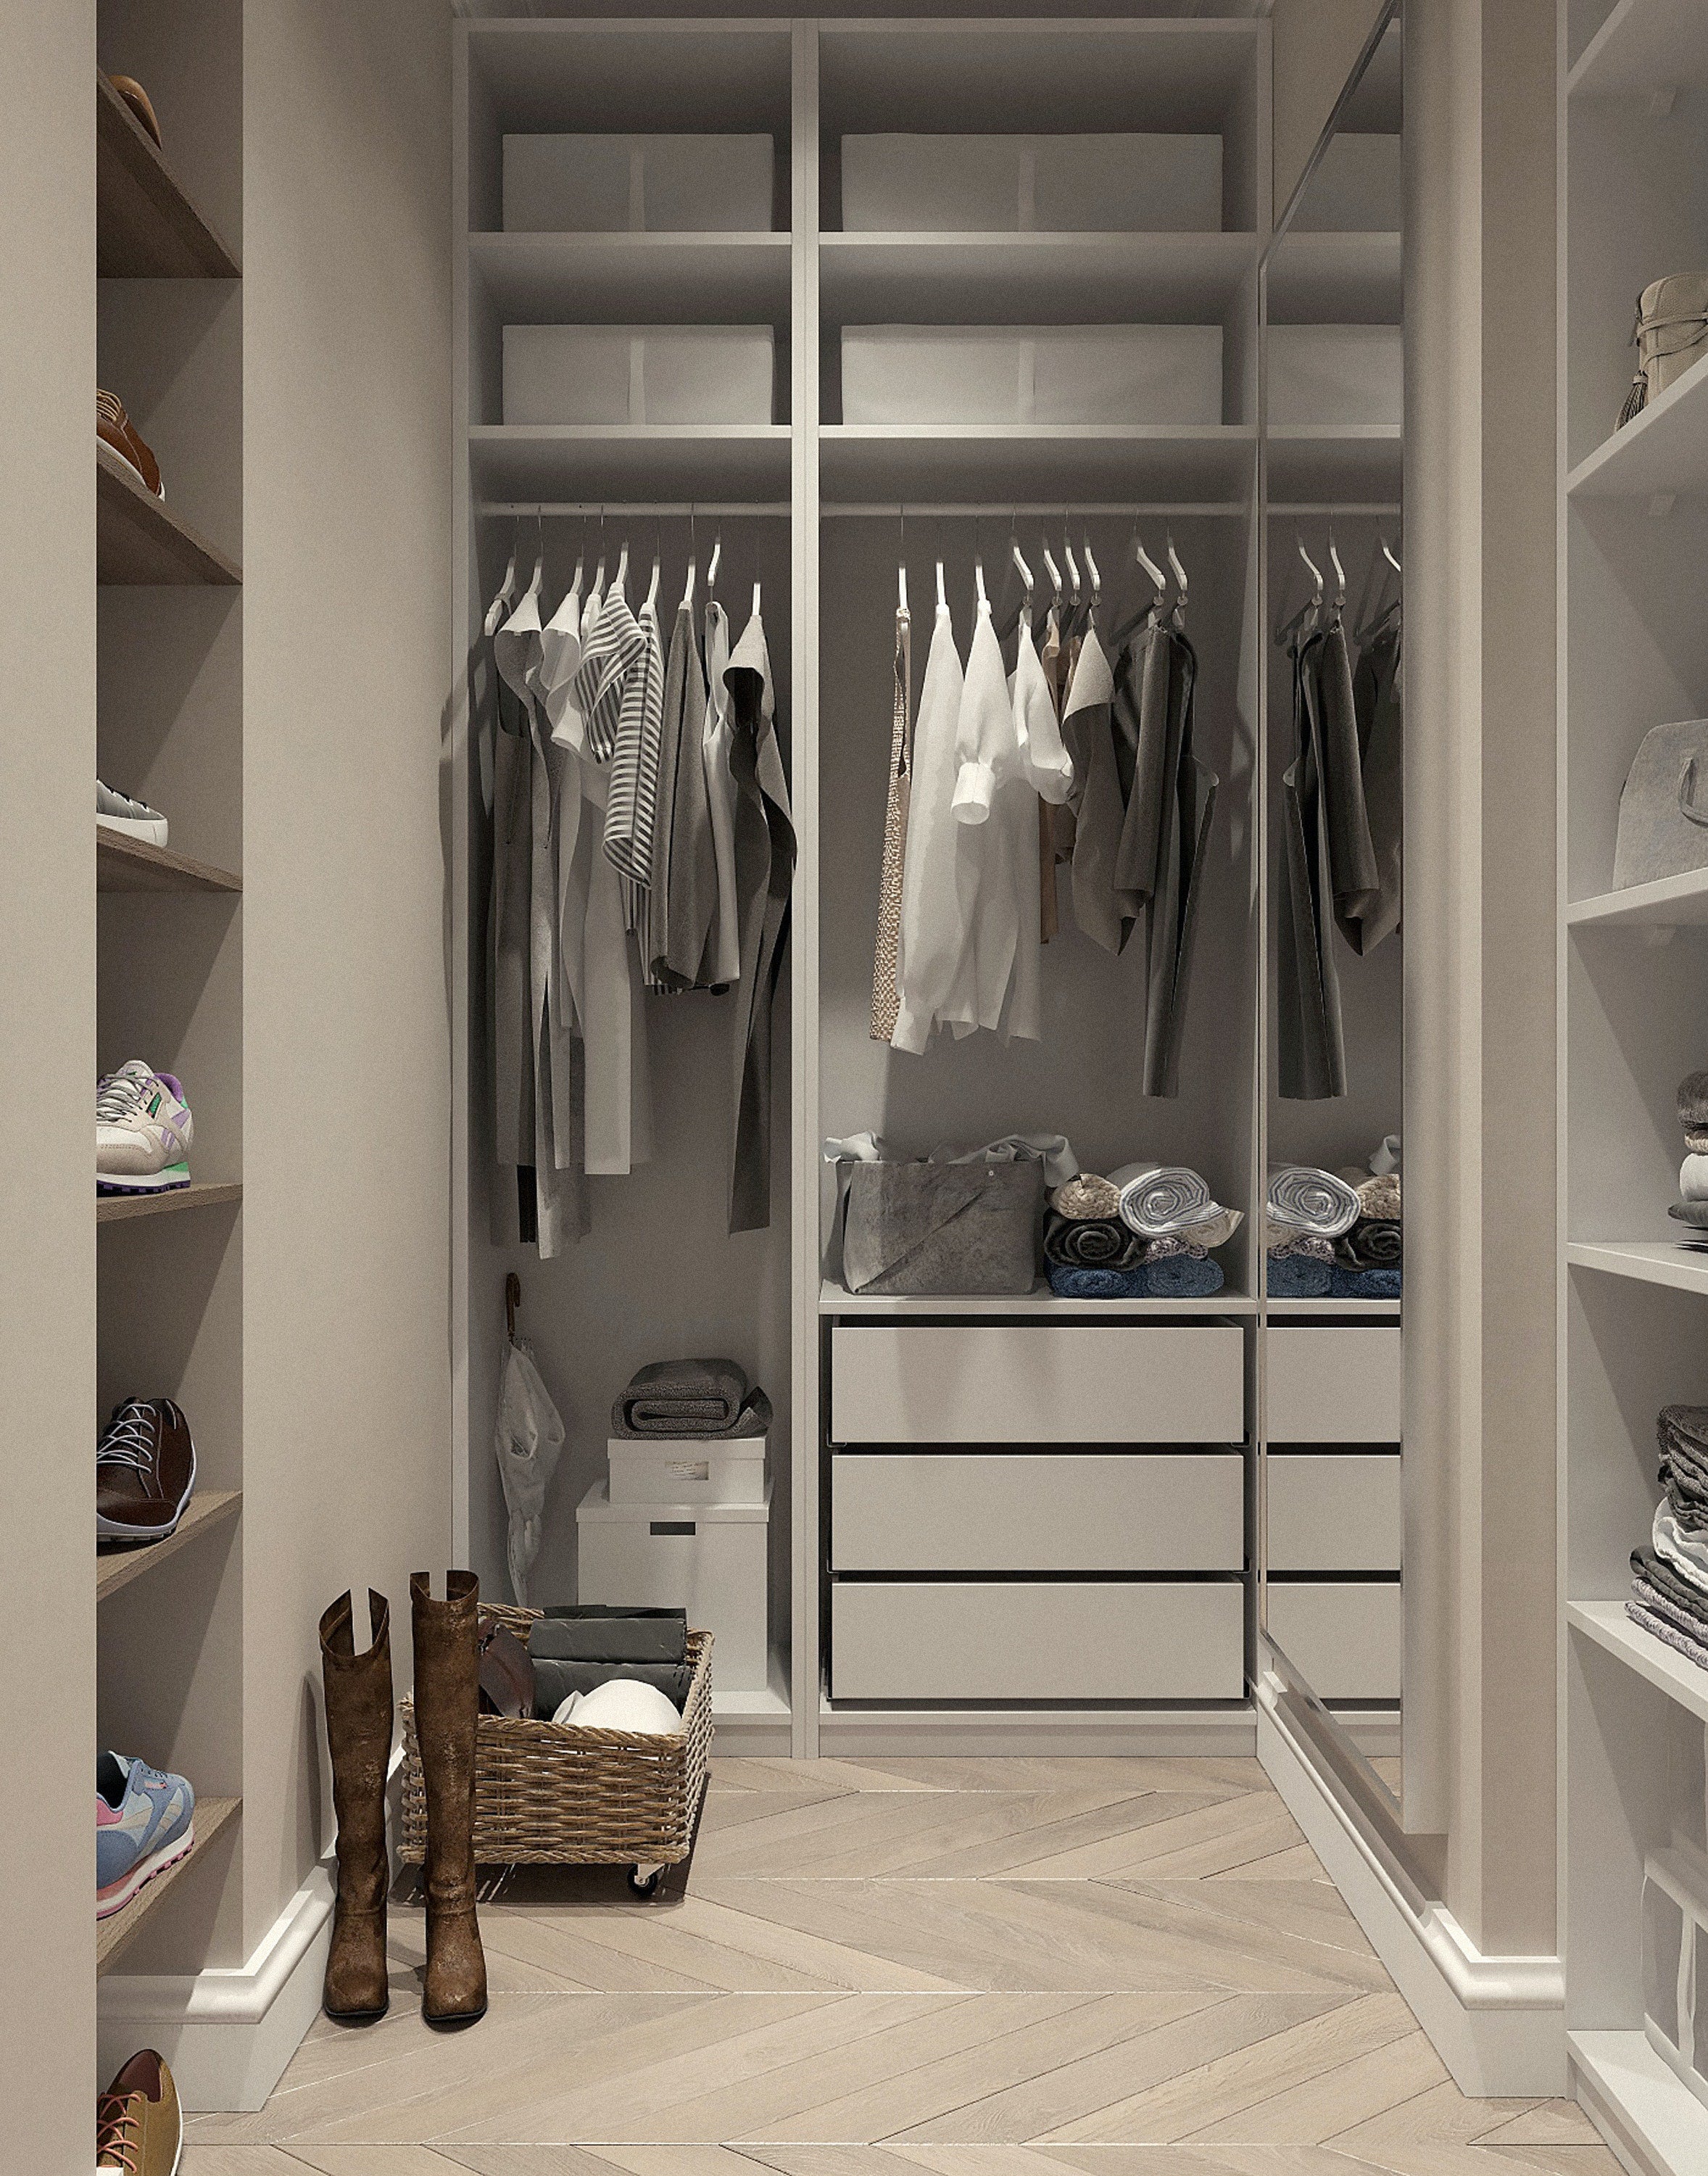 Organized clothes closet